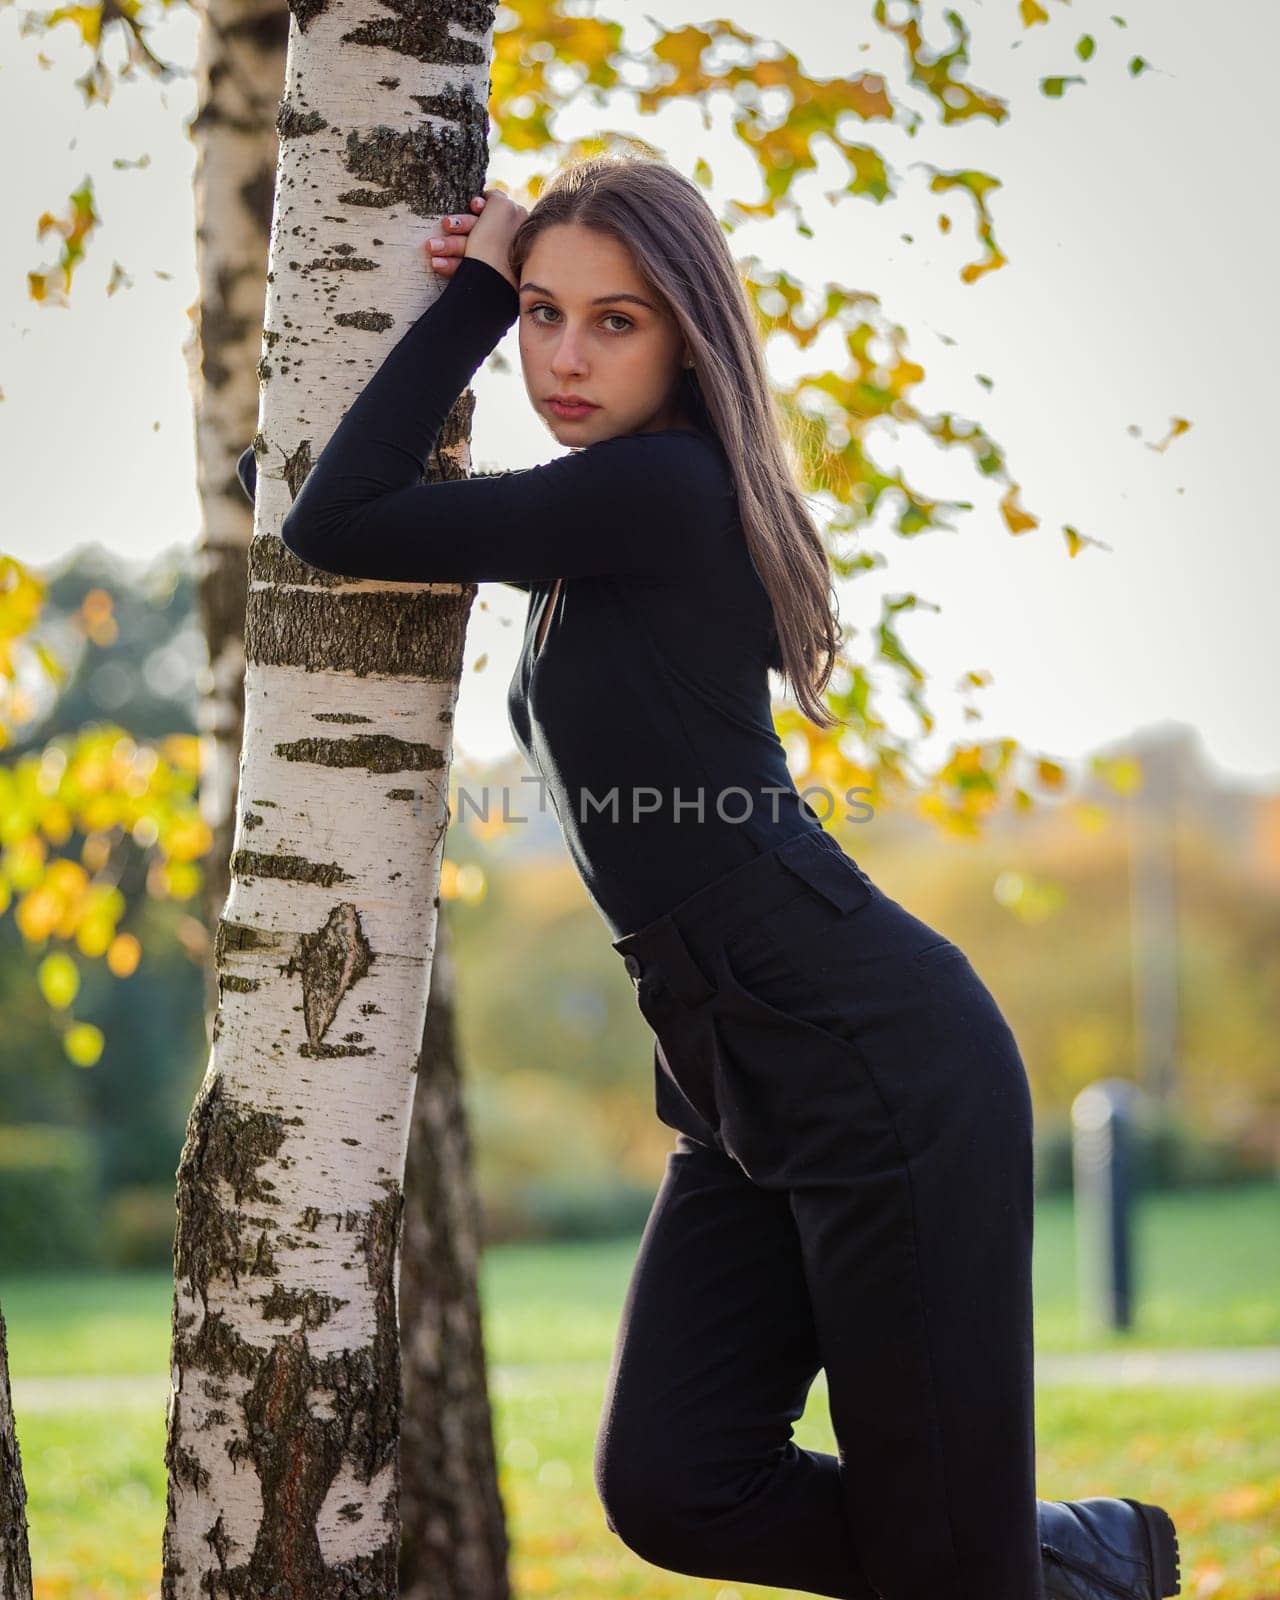 A beautiful girl posing near a birch tree in an autumn park